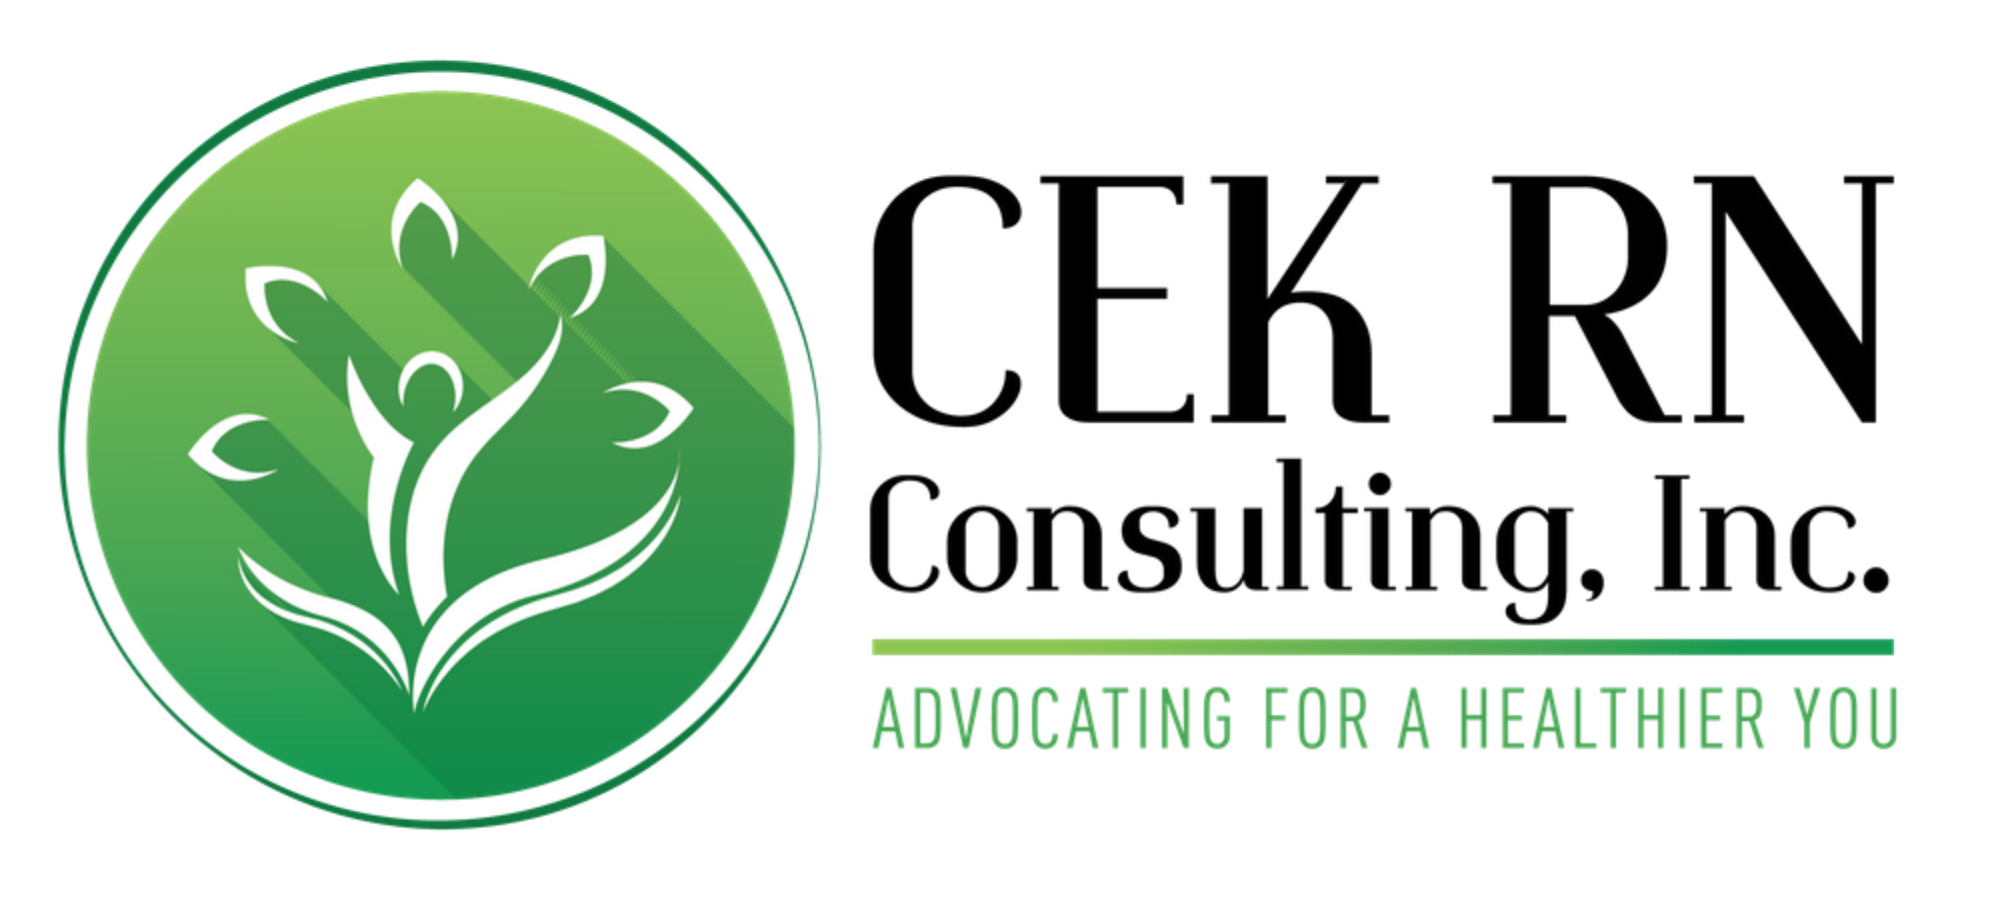 CEK RN Consulting, Inc.